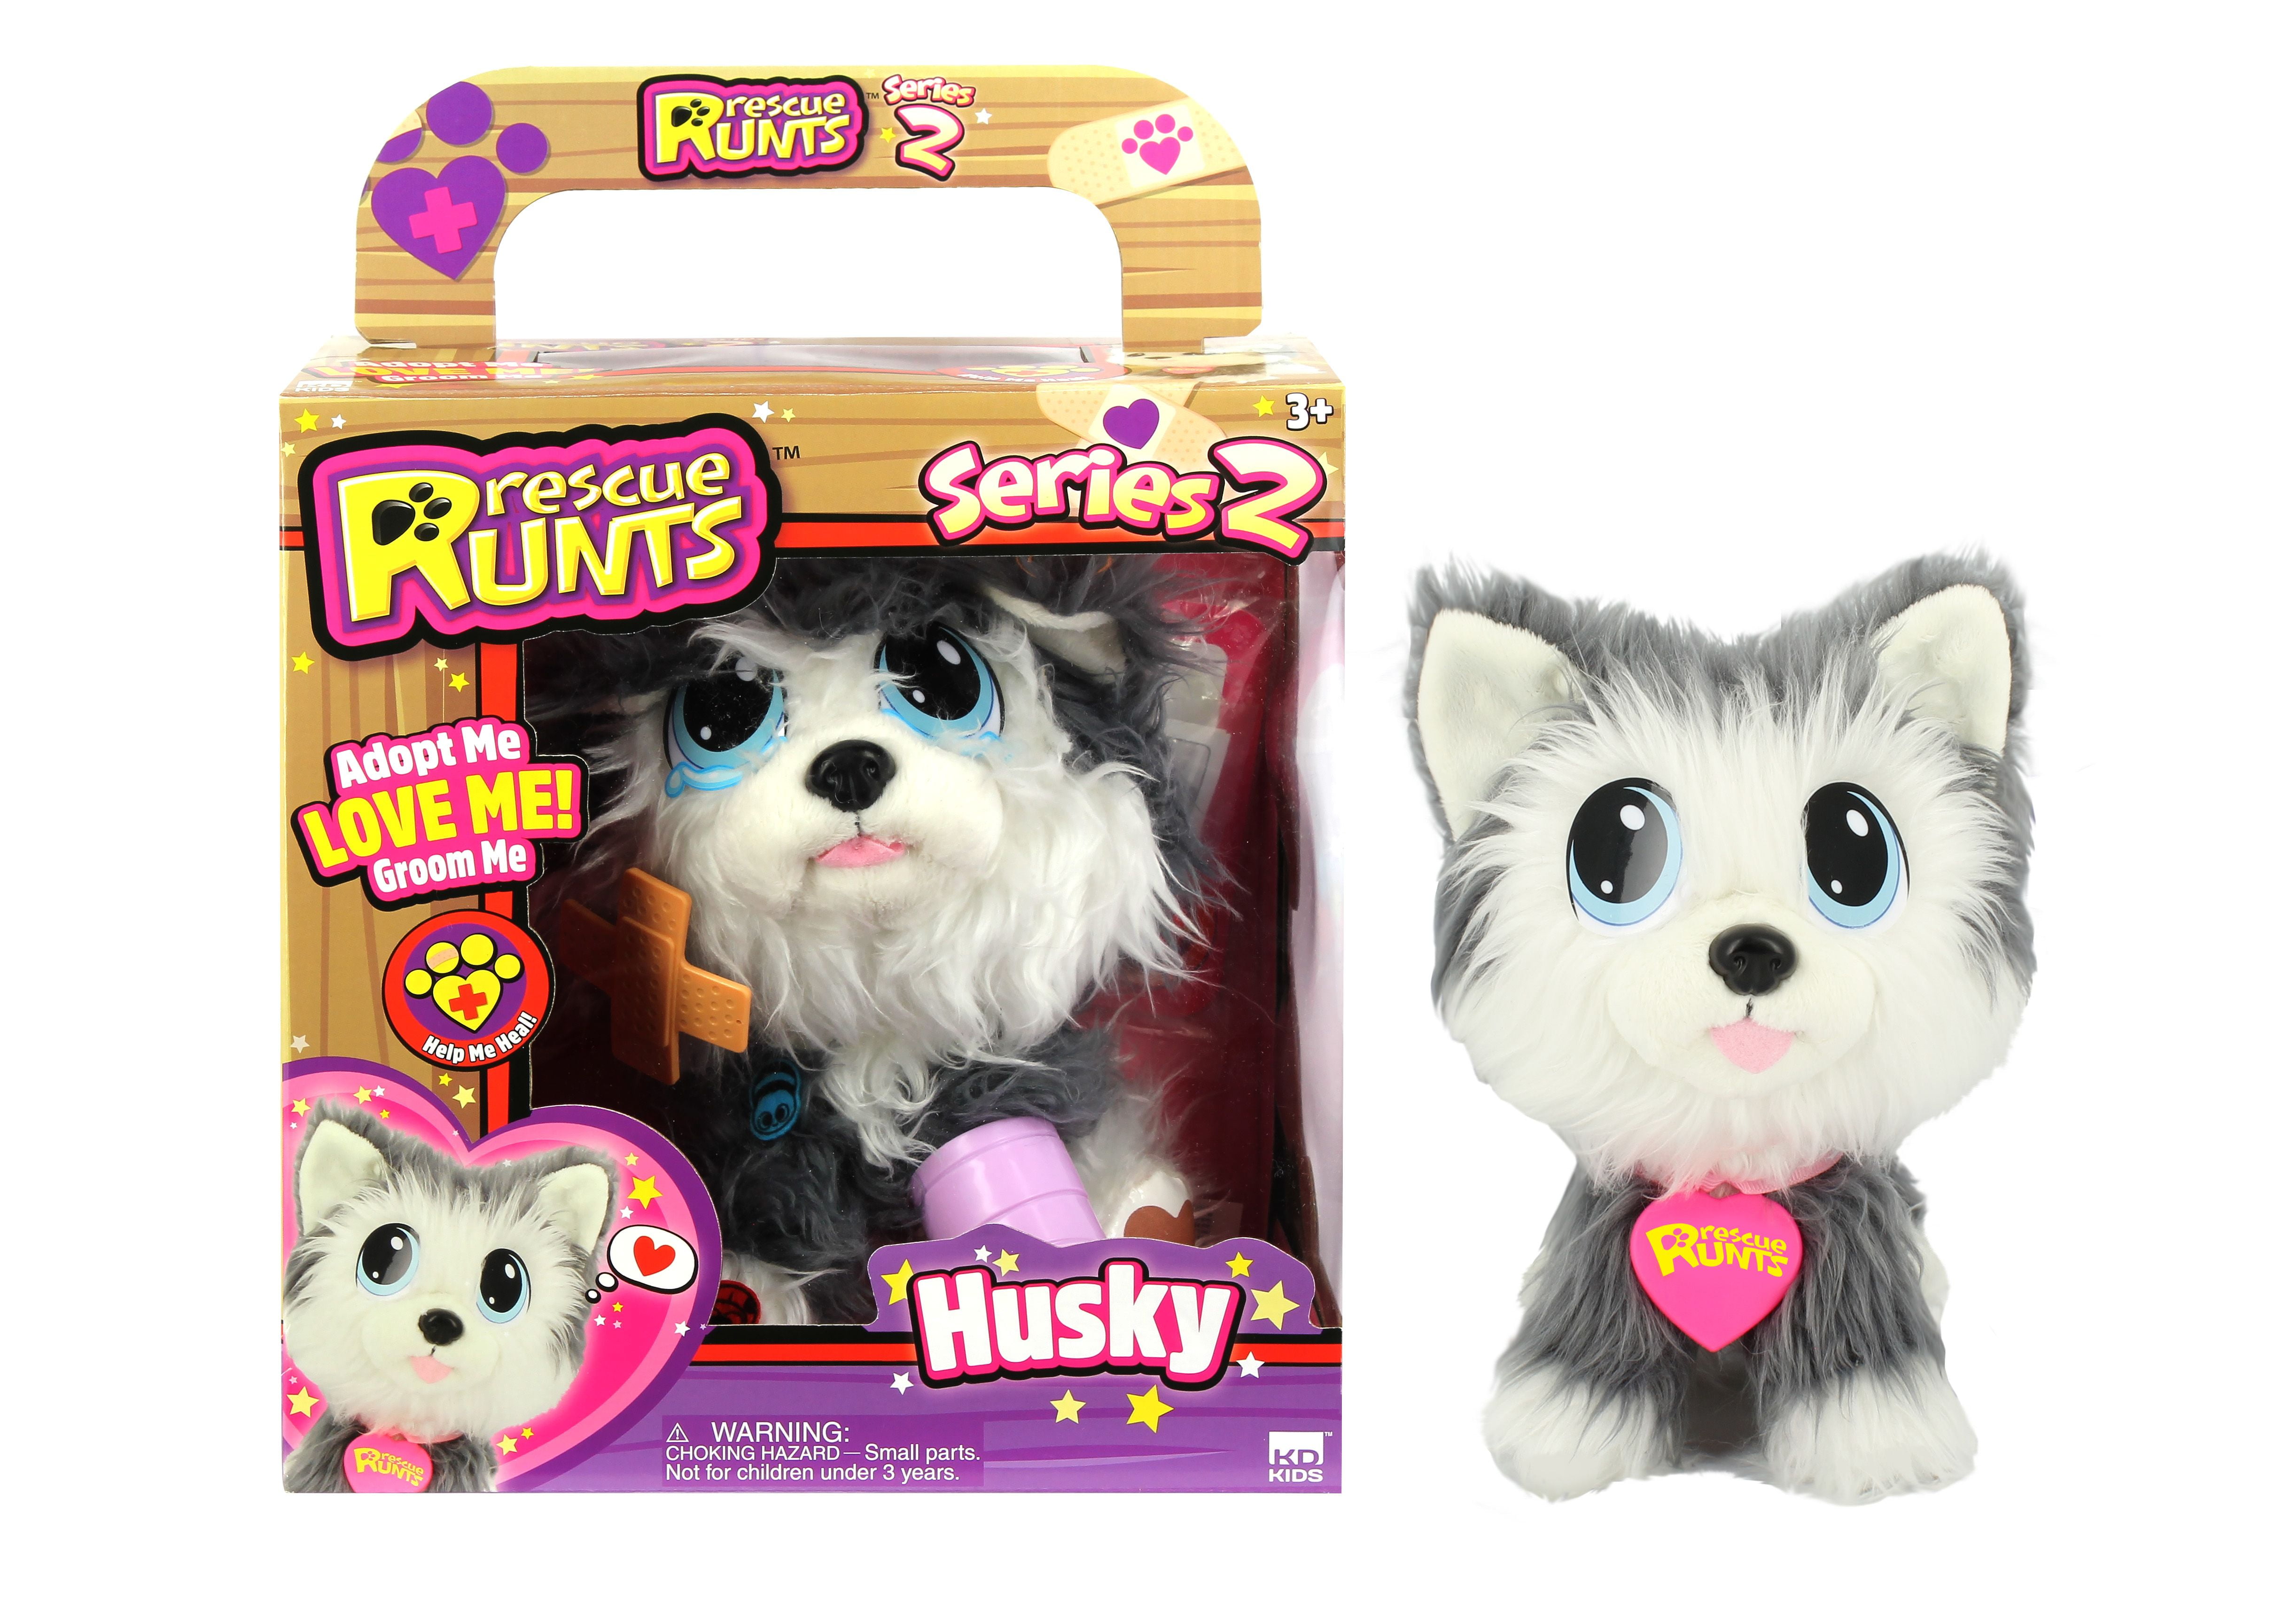 Rescue Runts Dog 8" Plush Stuffed Animal Toy 